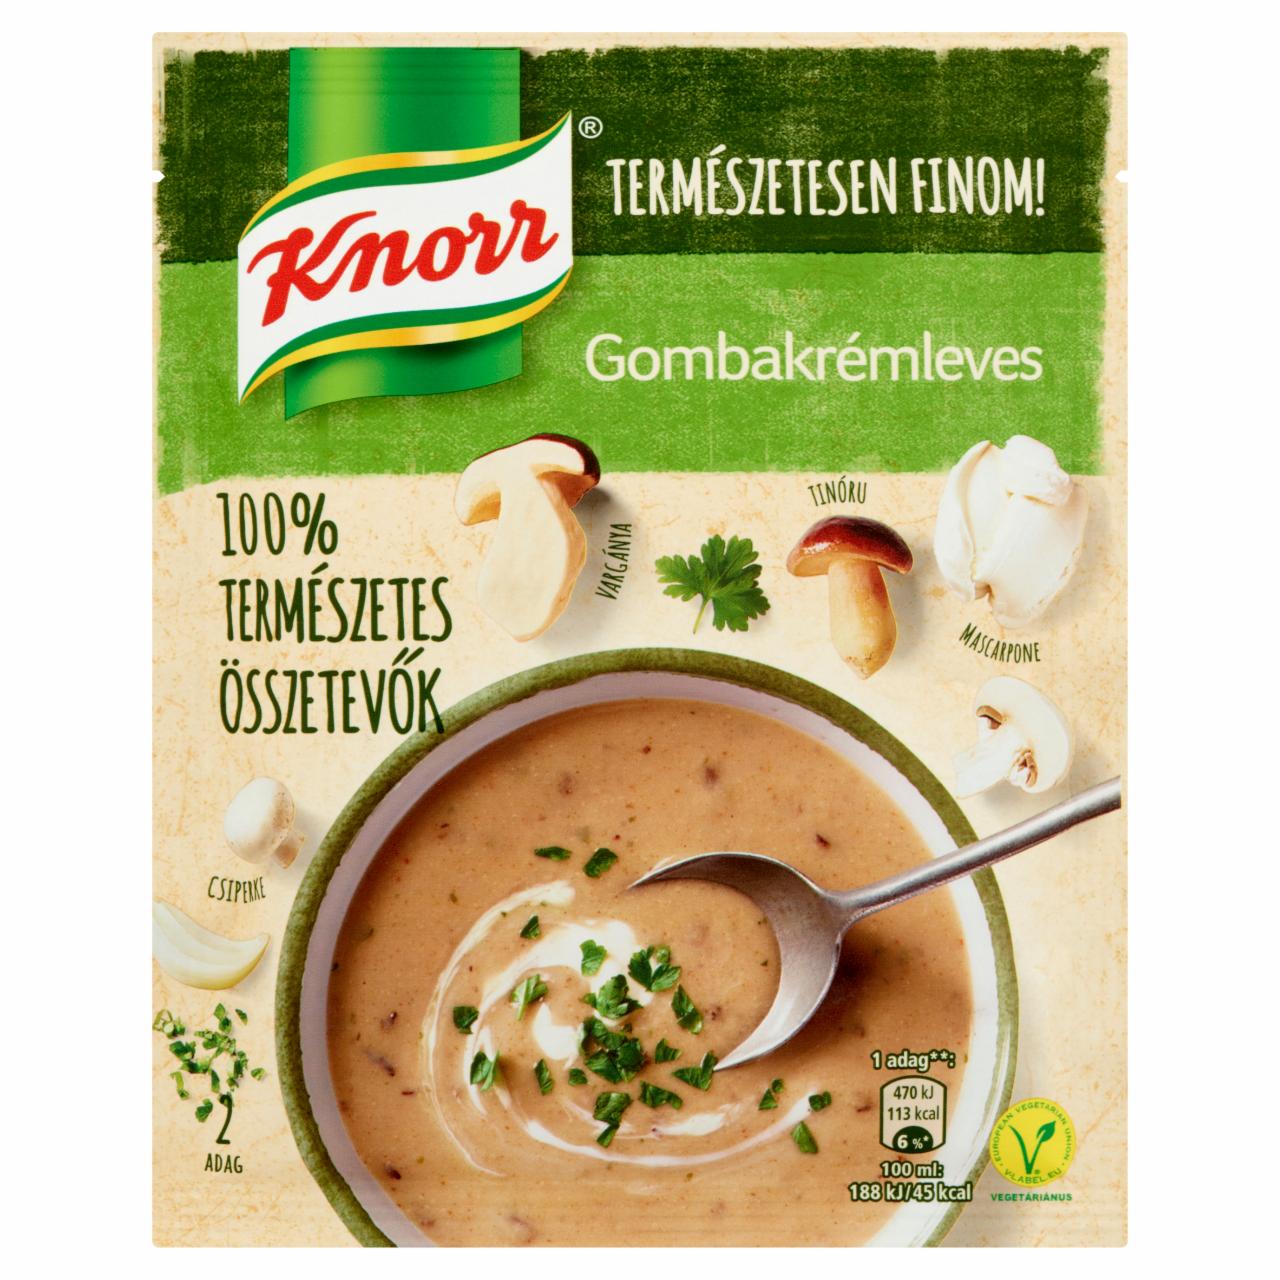 Képek - Knorr gombakrémleves 57 g